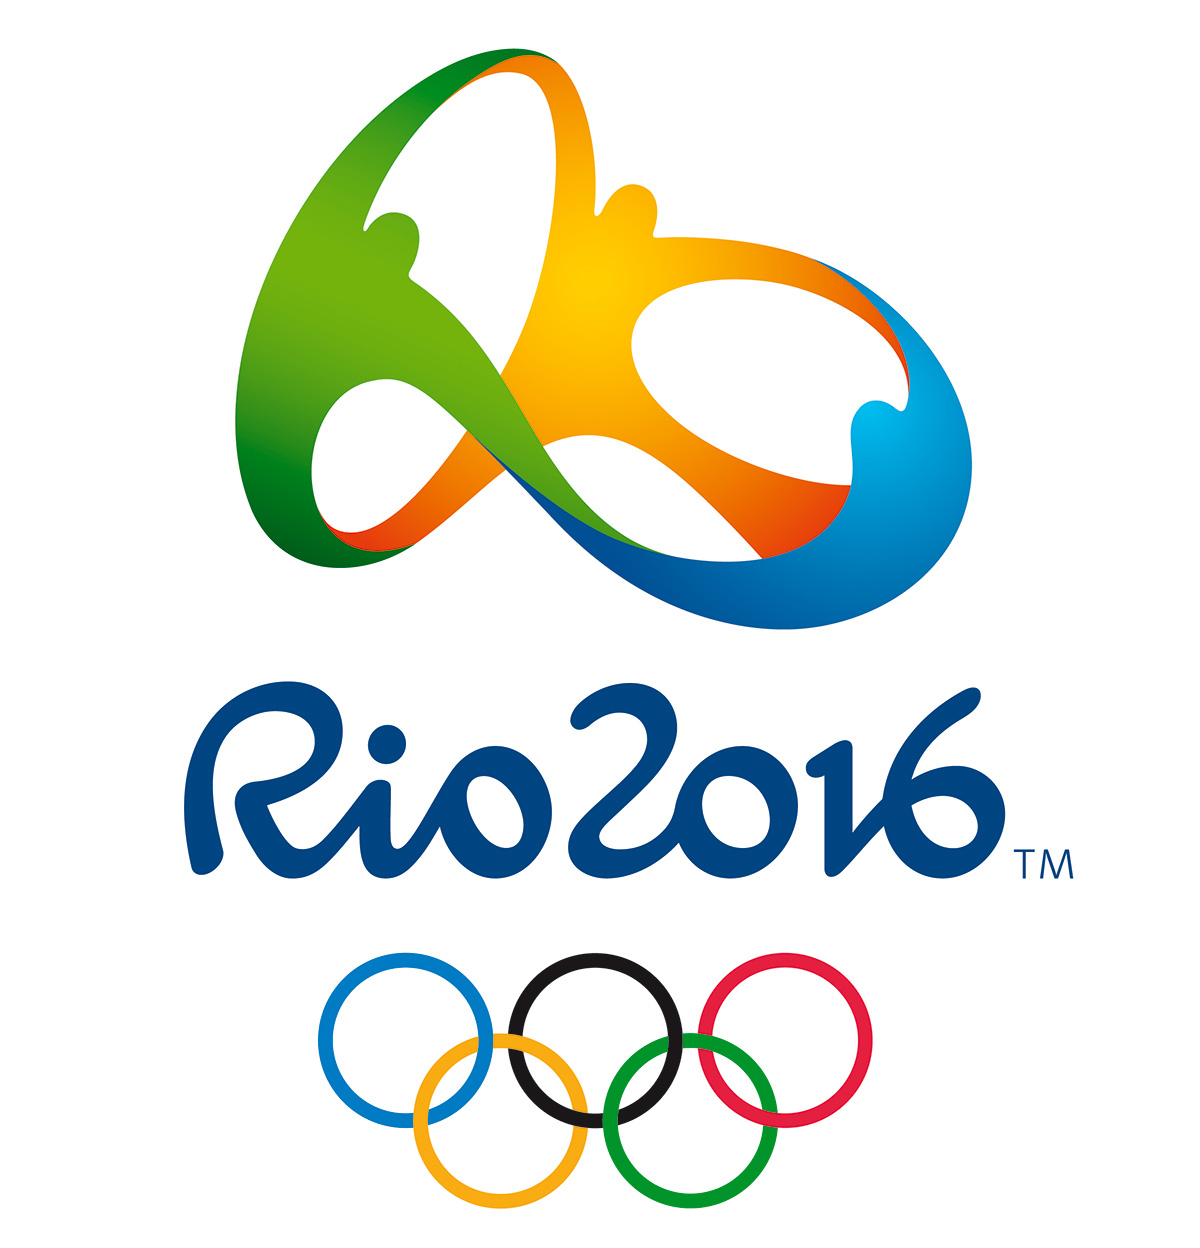 How the Rio 2016 Olympics logo was created | Creative Bloq